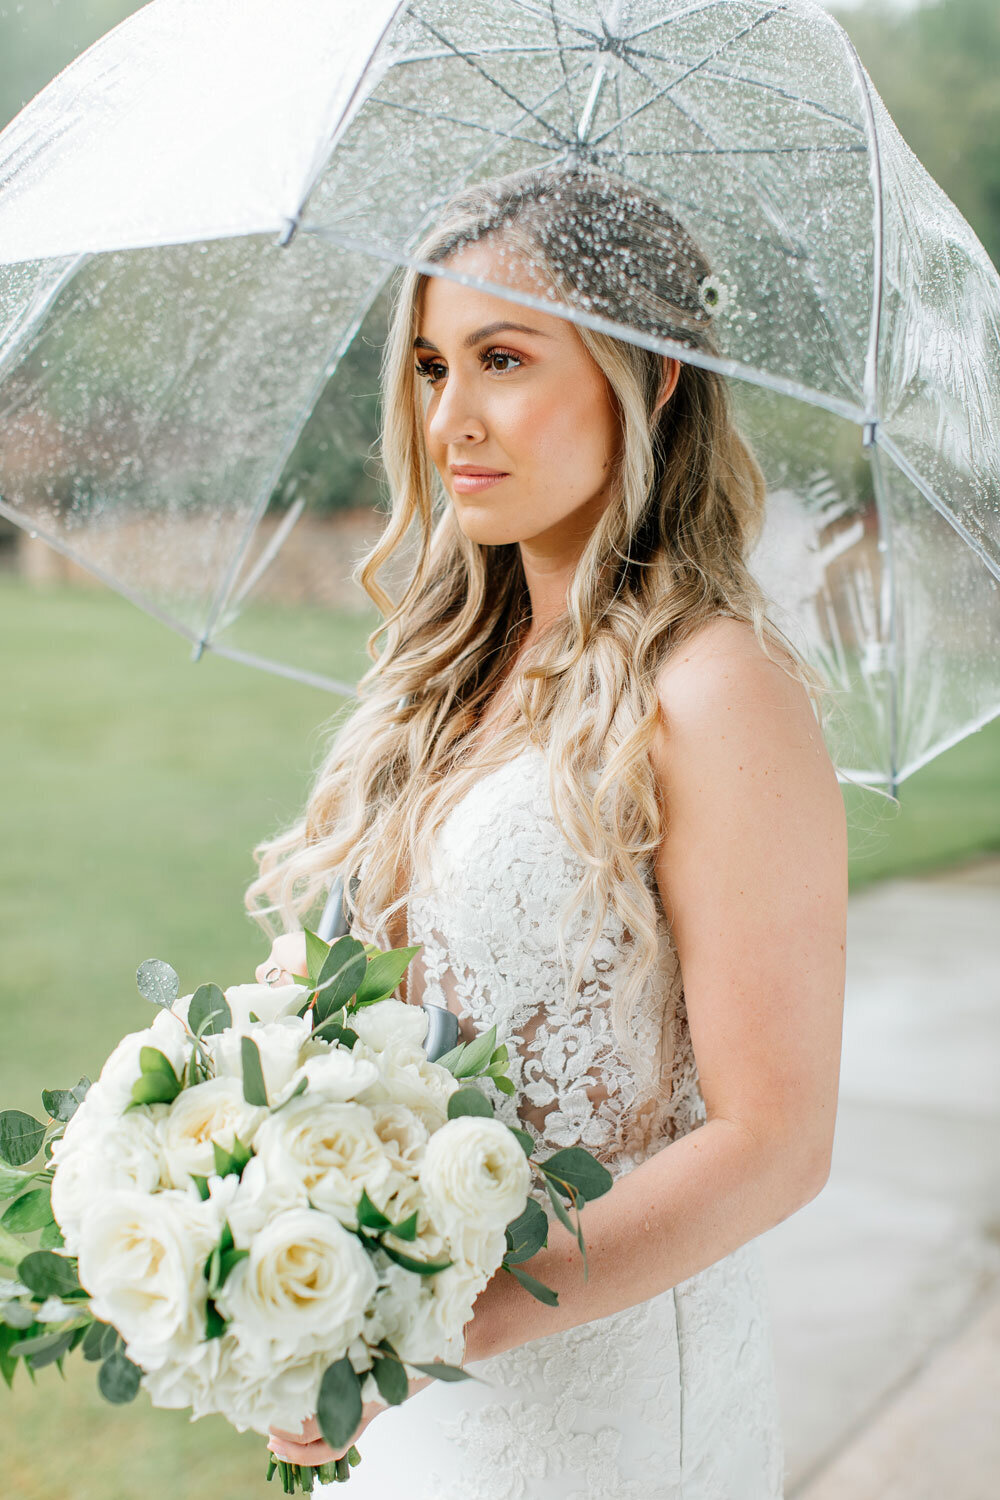 rainy wedding day bride with clear umbrella pretty rain photos